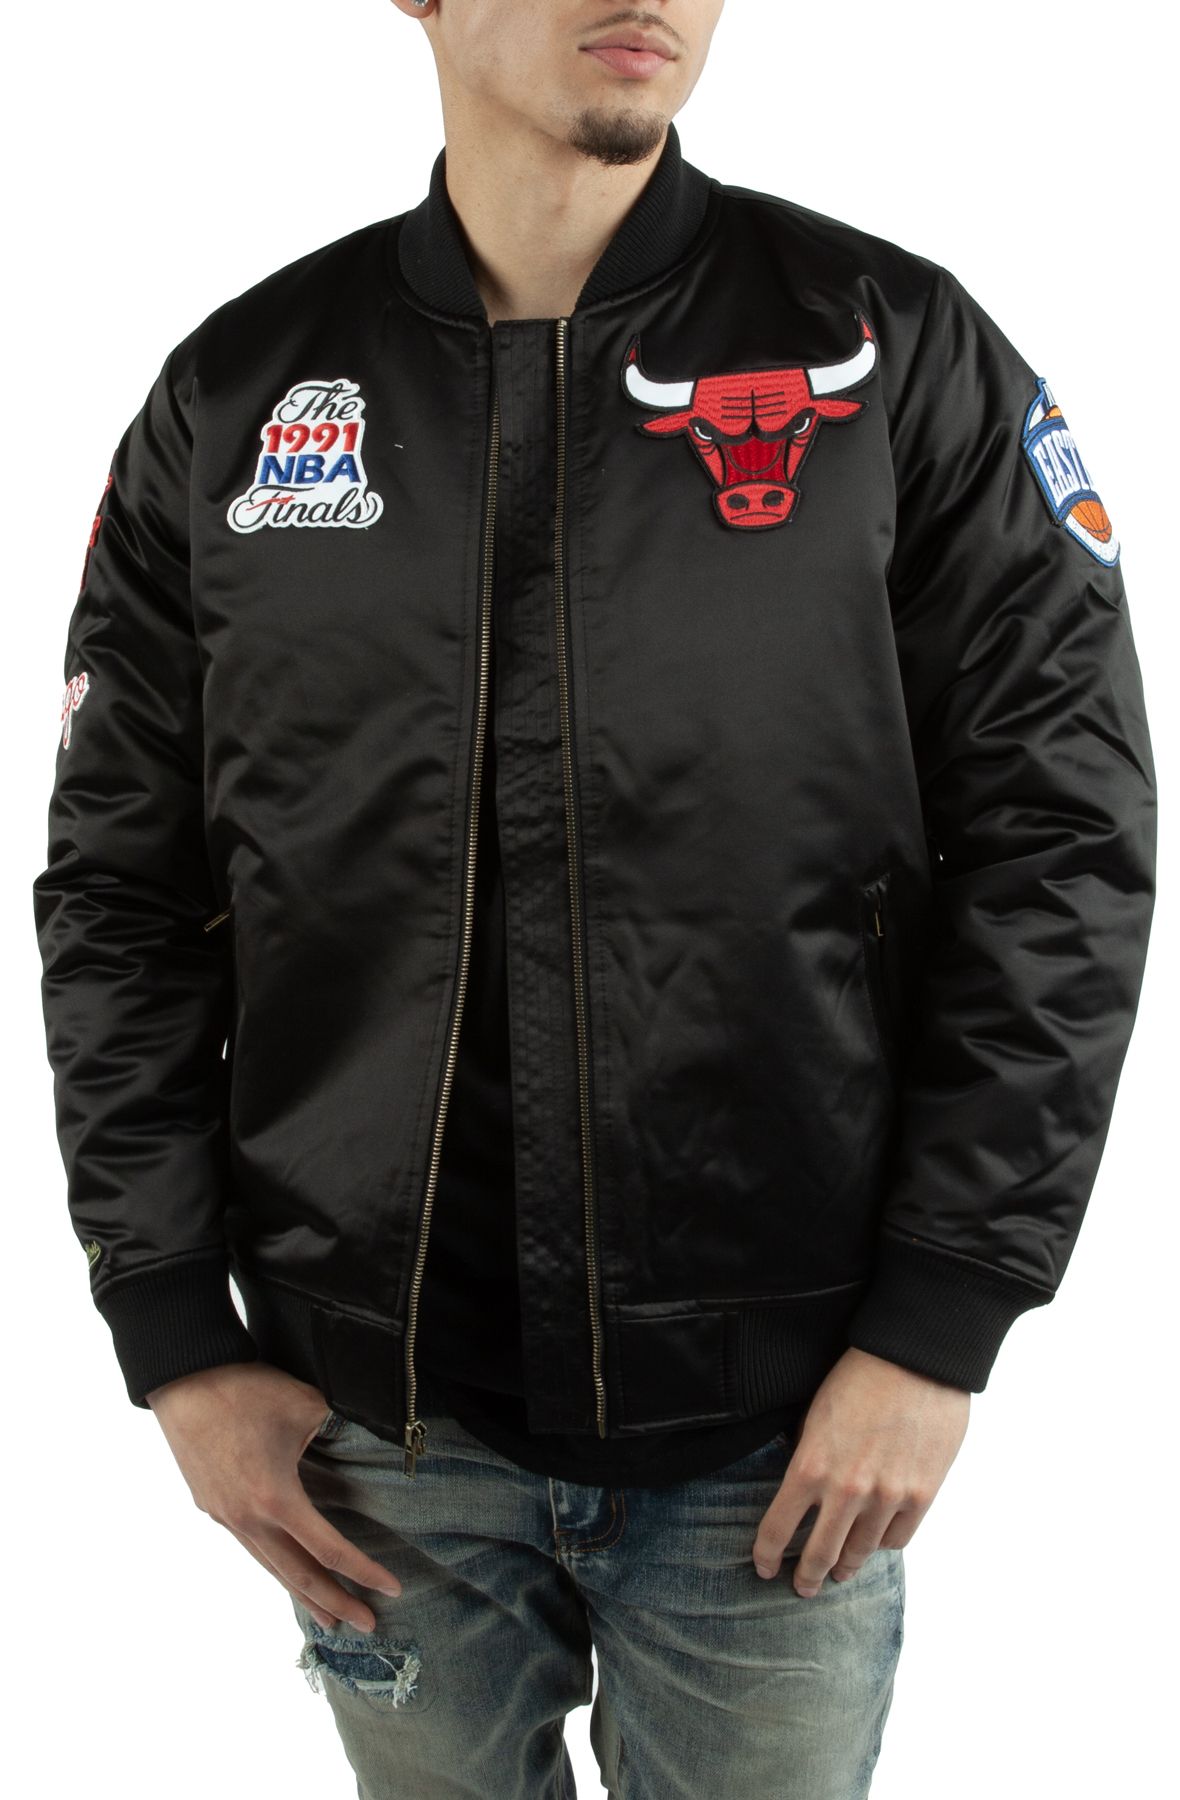 Chicago Bulls Full Leather Jacket - Black/Black Small